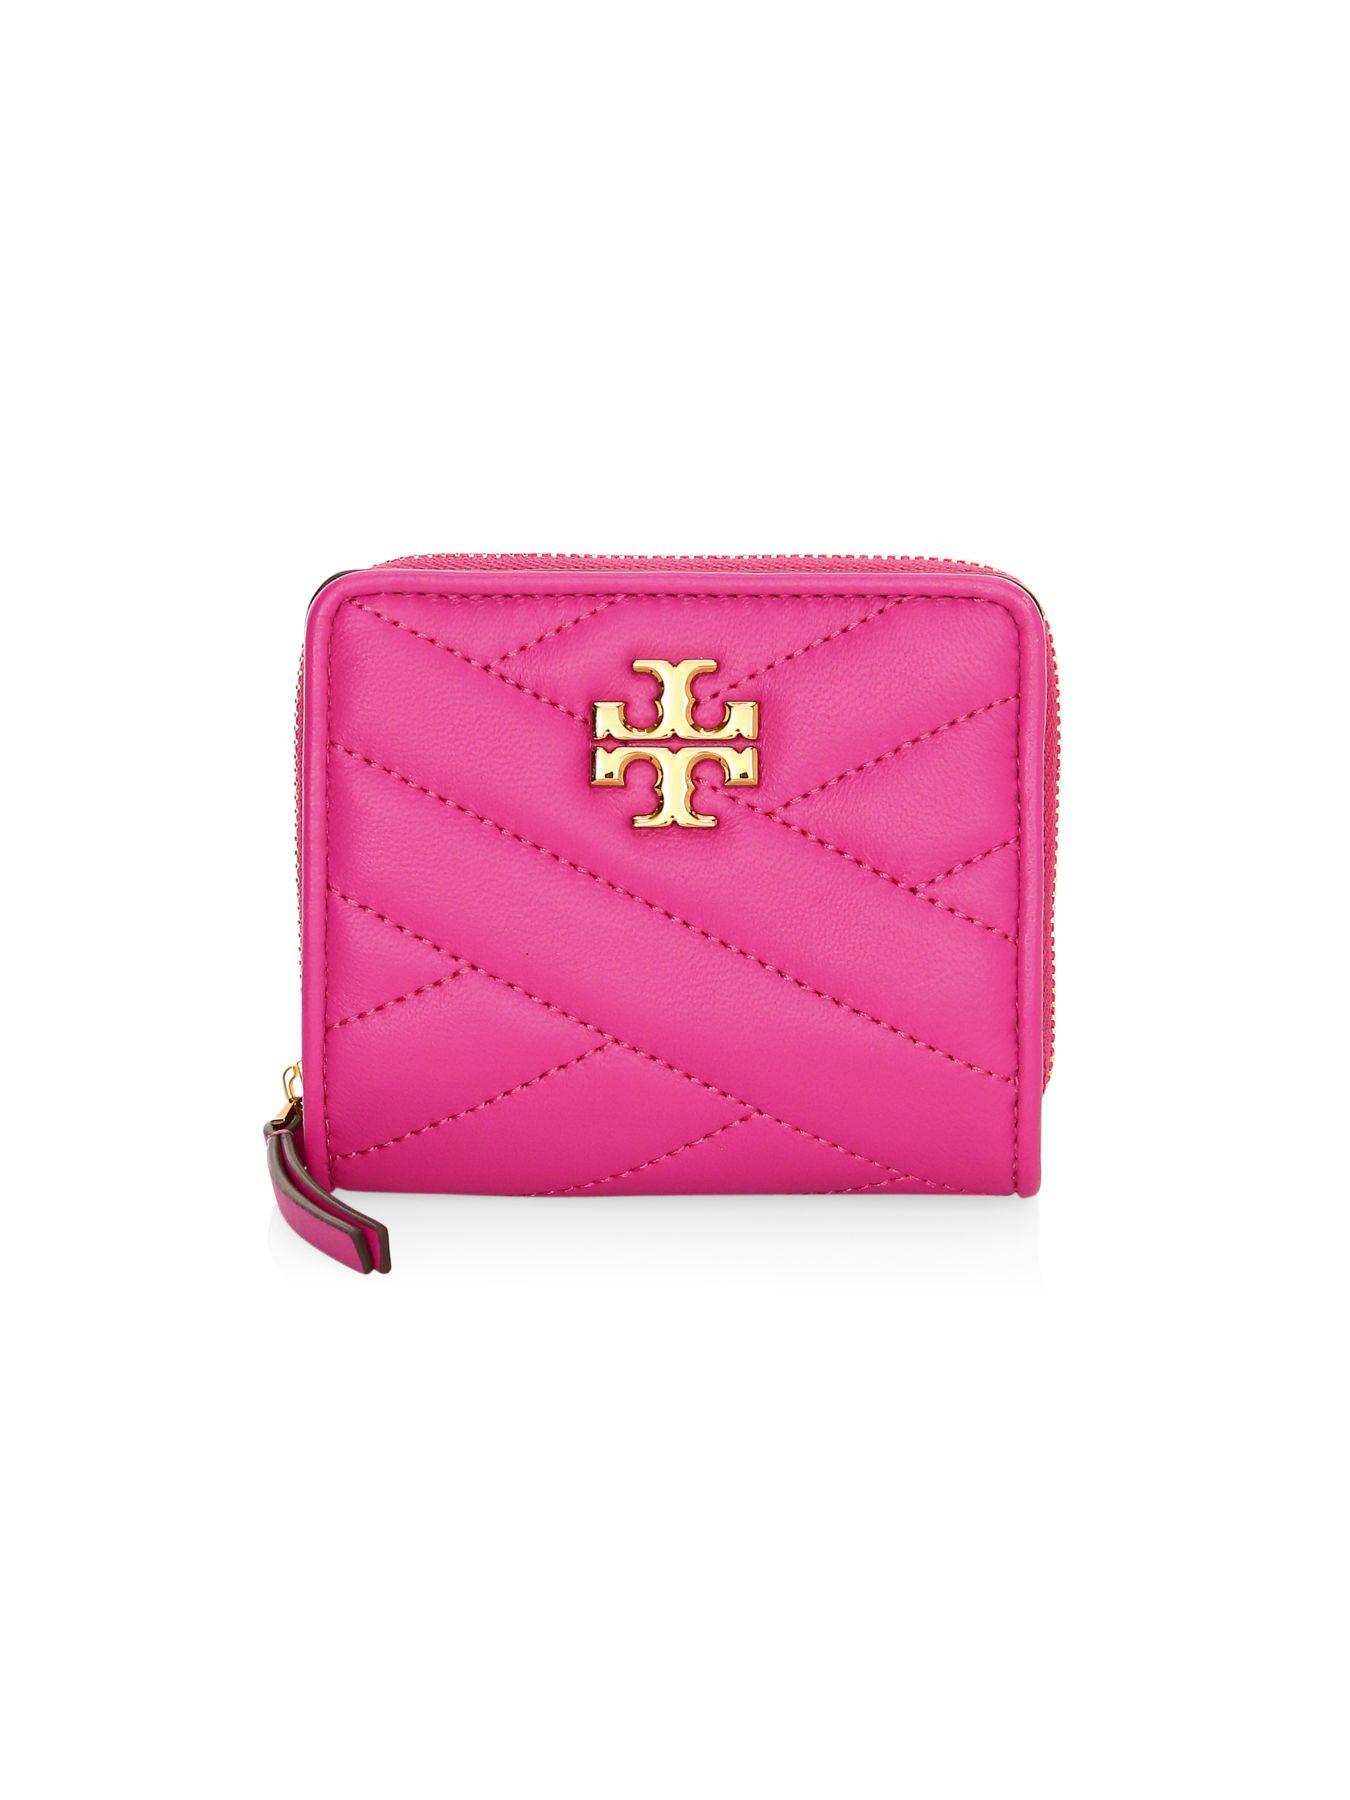 Tory Burch Kira Chevron Leather Bi-fold Wallet in Pink | Lyst